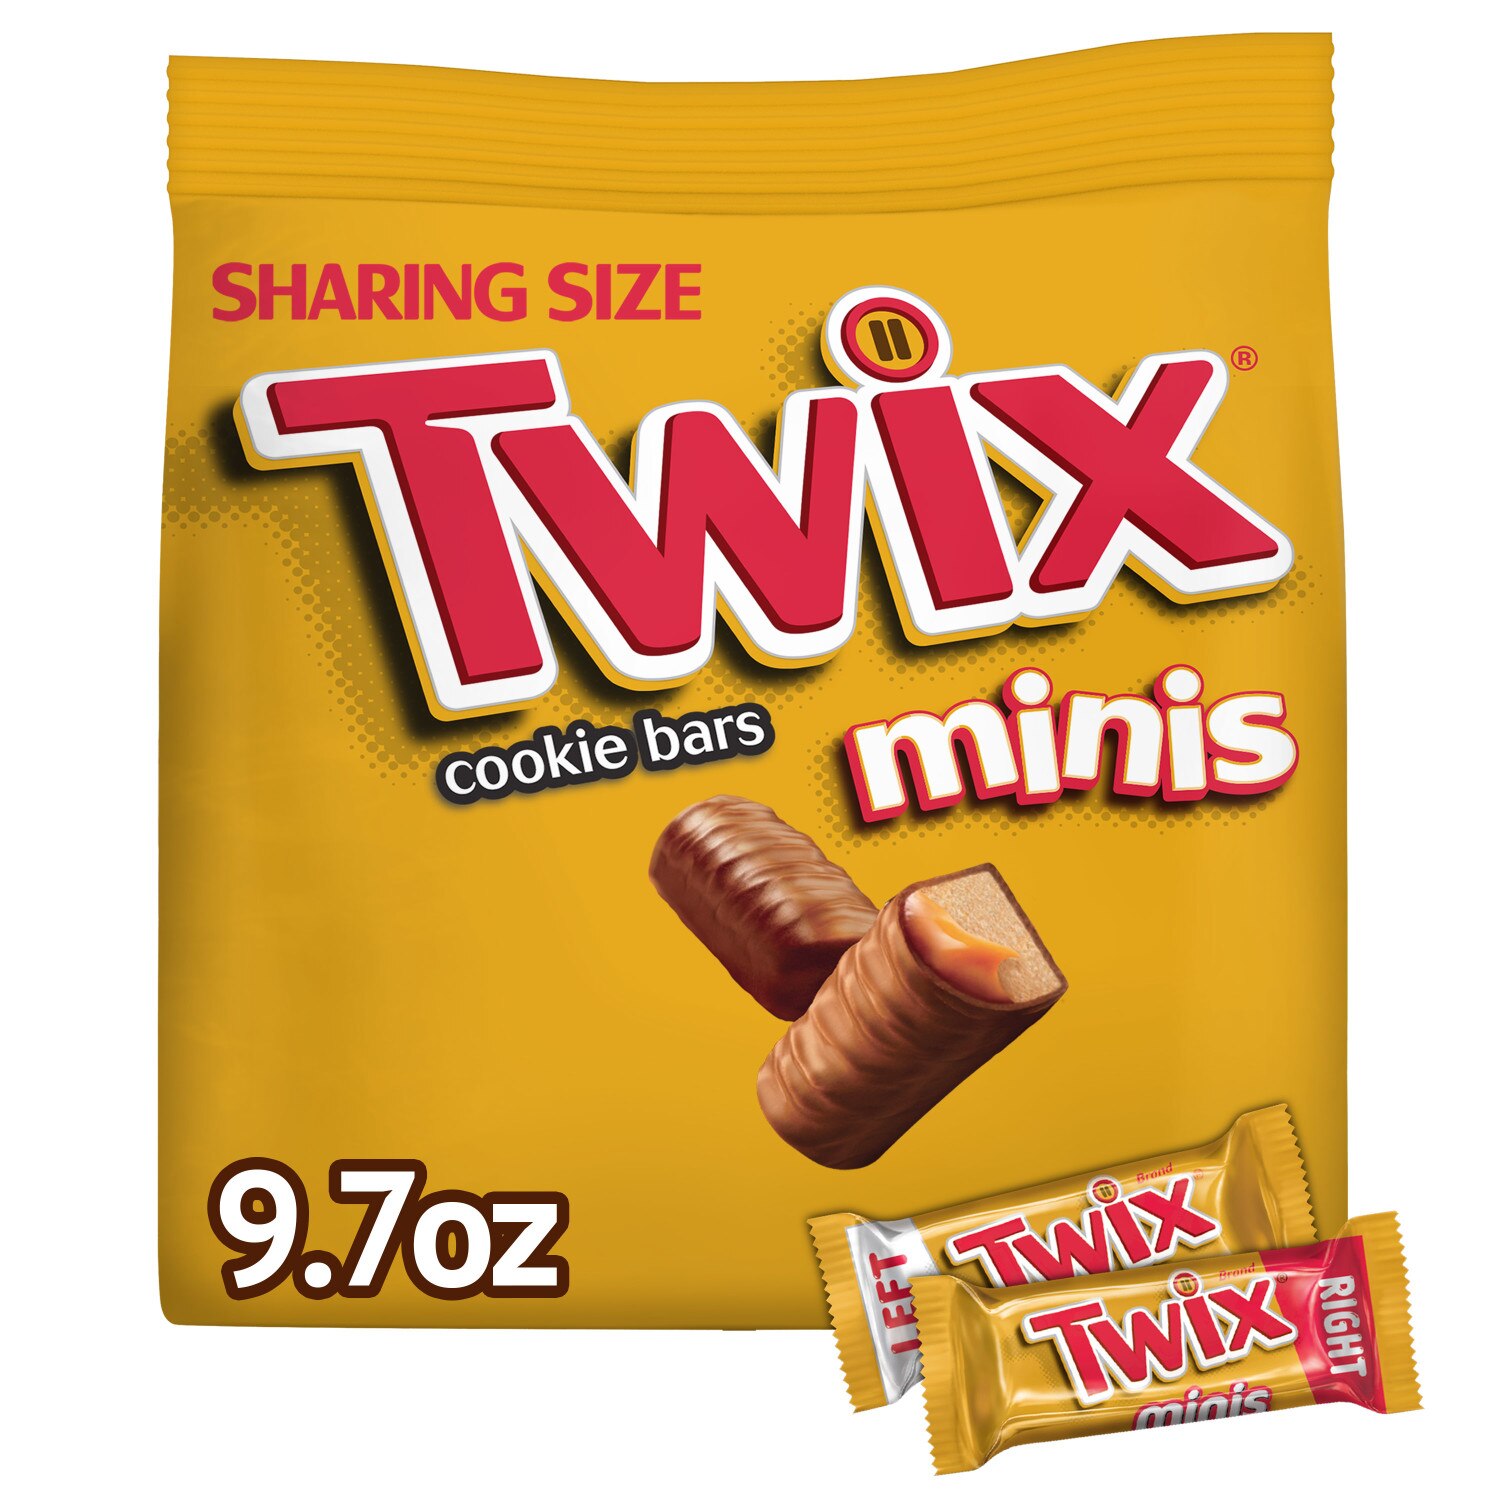 TWIX Caramel Minis Size Chocolate Cookie Candy Bar, Sharing Size, 9.7 oz Bag